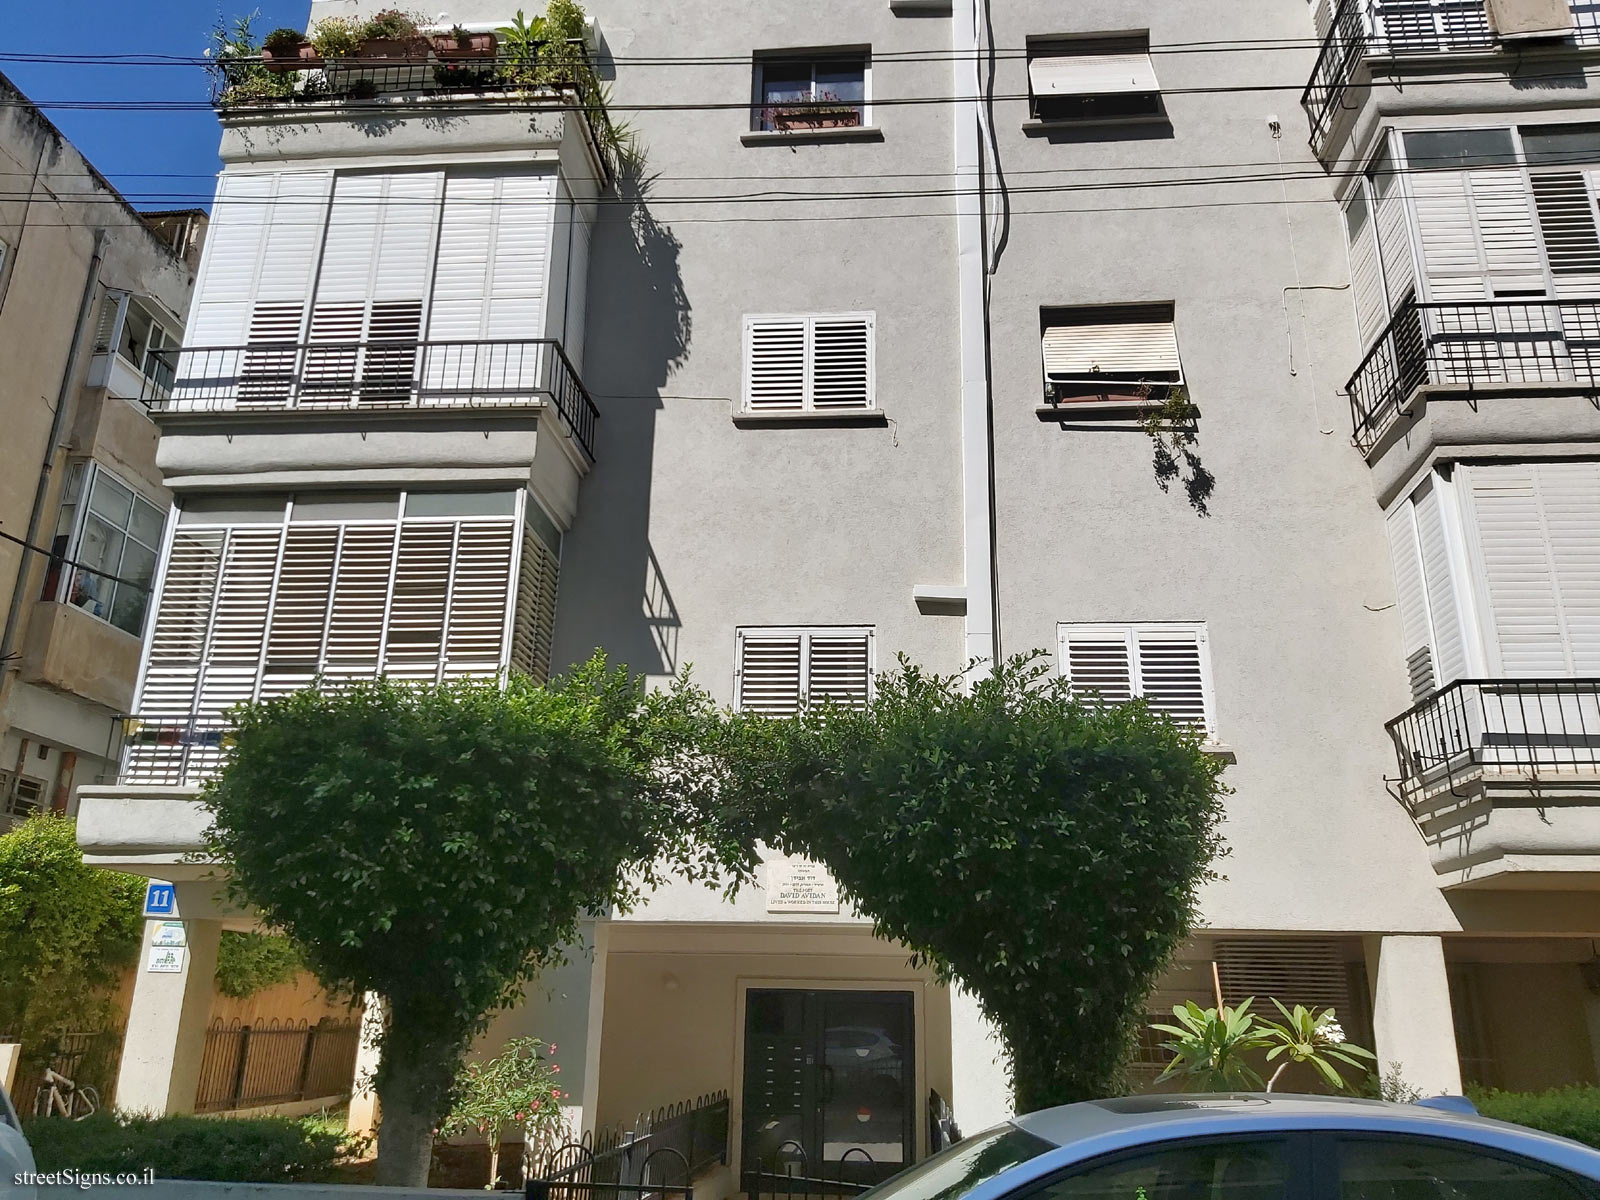 The house of David Avidan - Shimshon ha-Gibor St 11, Tel Aviv-Yafo, Israel